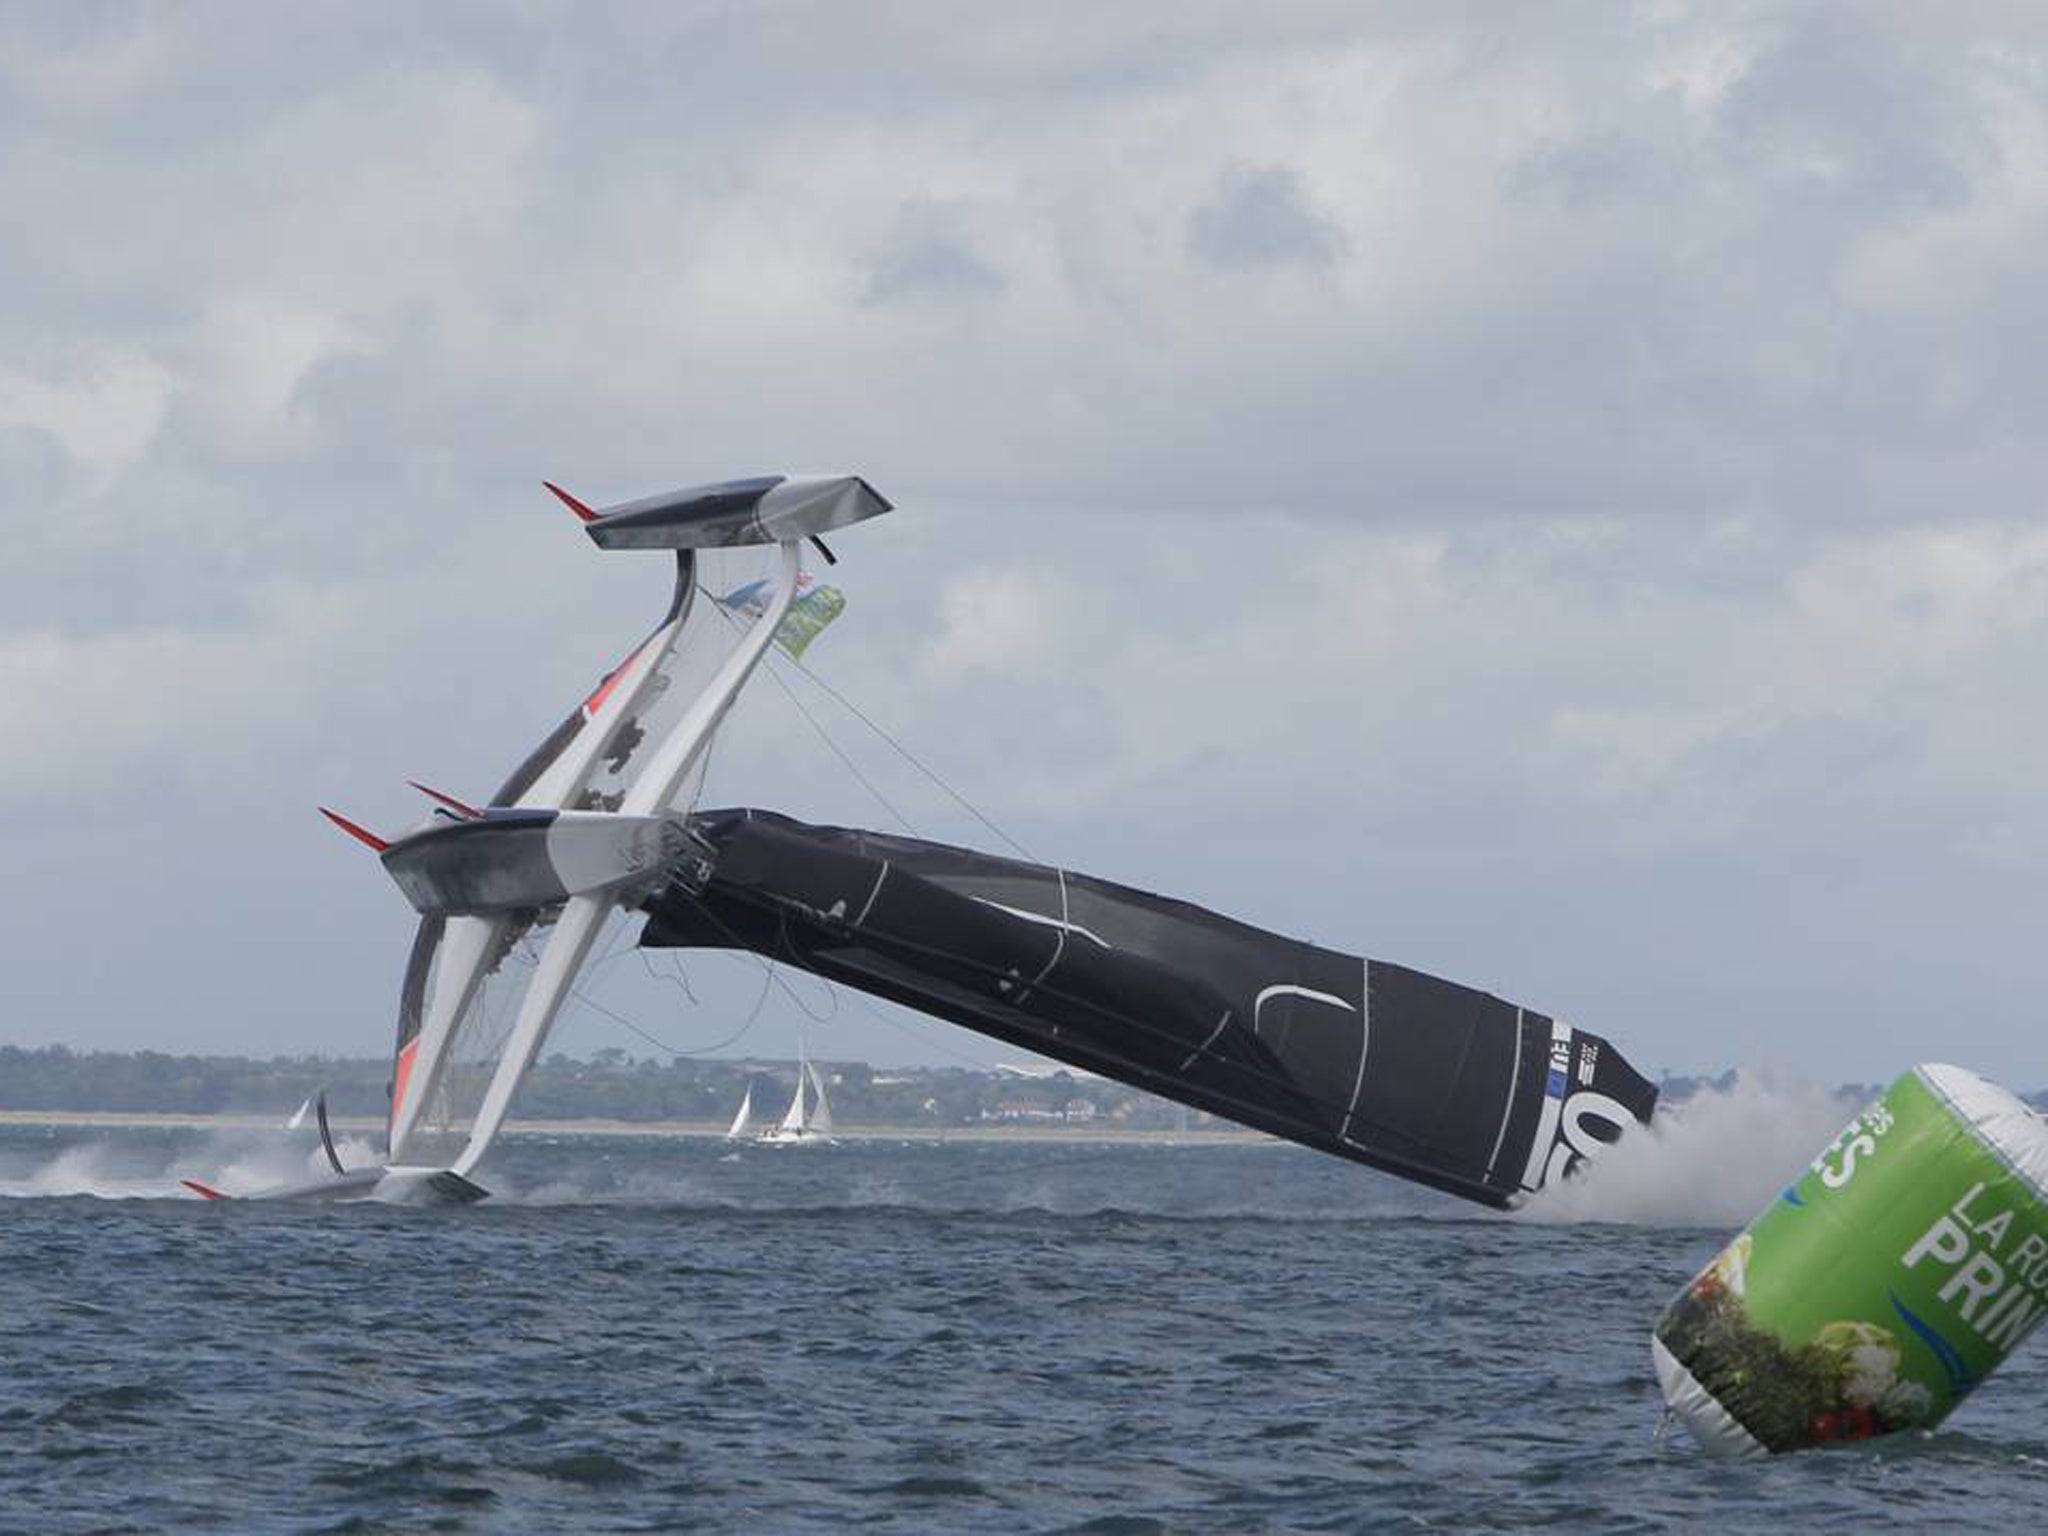 Spindrift trimaran capsized at the start of the Dublin Bay race